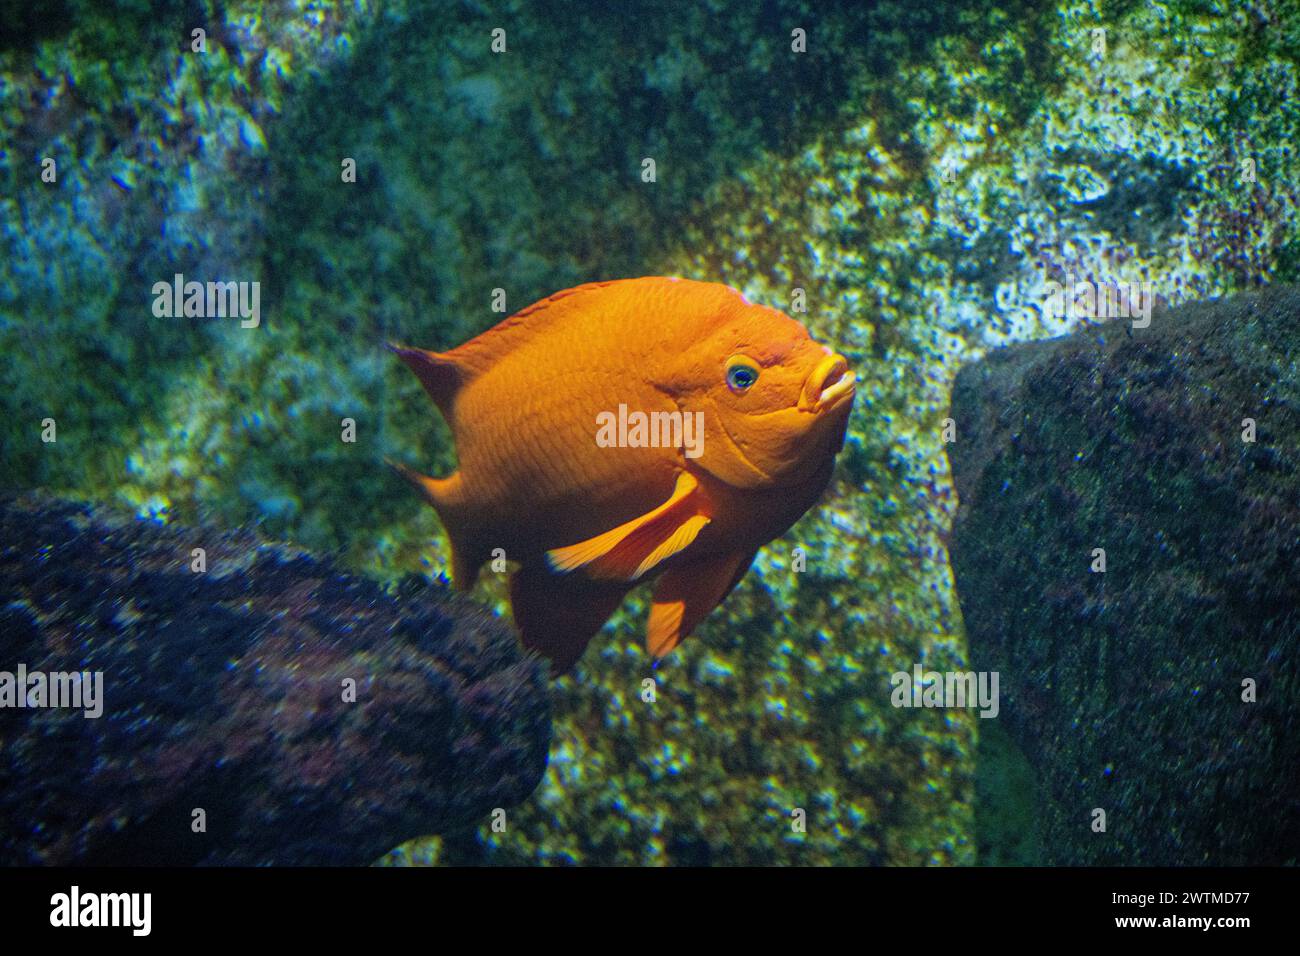 Garibaldi damselfish (Hypsypops rubicundus) is a species of bright orange fish in the damselfish family. Stock Photo